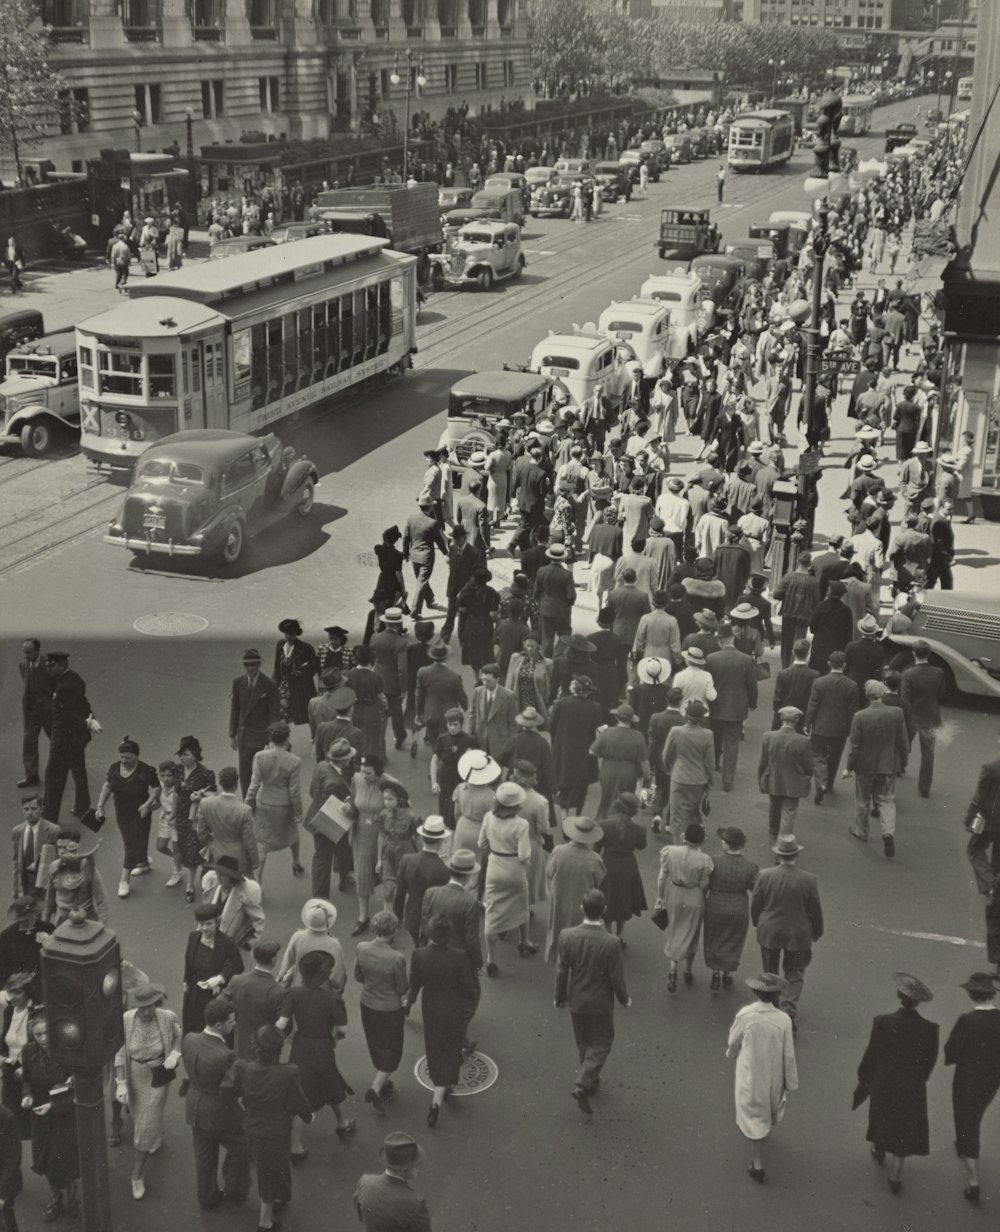 people walking on street during daytime in 1937